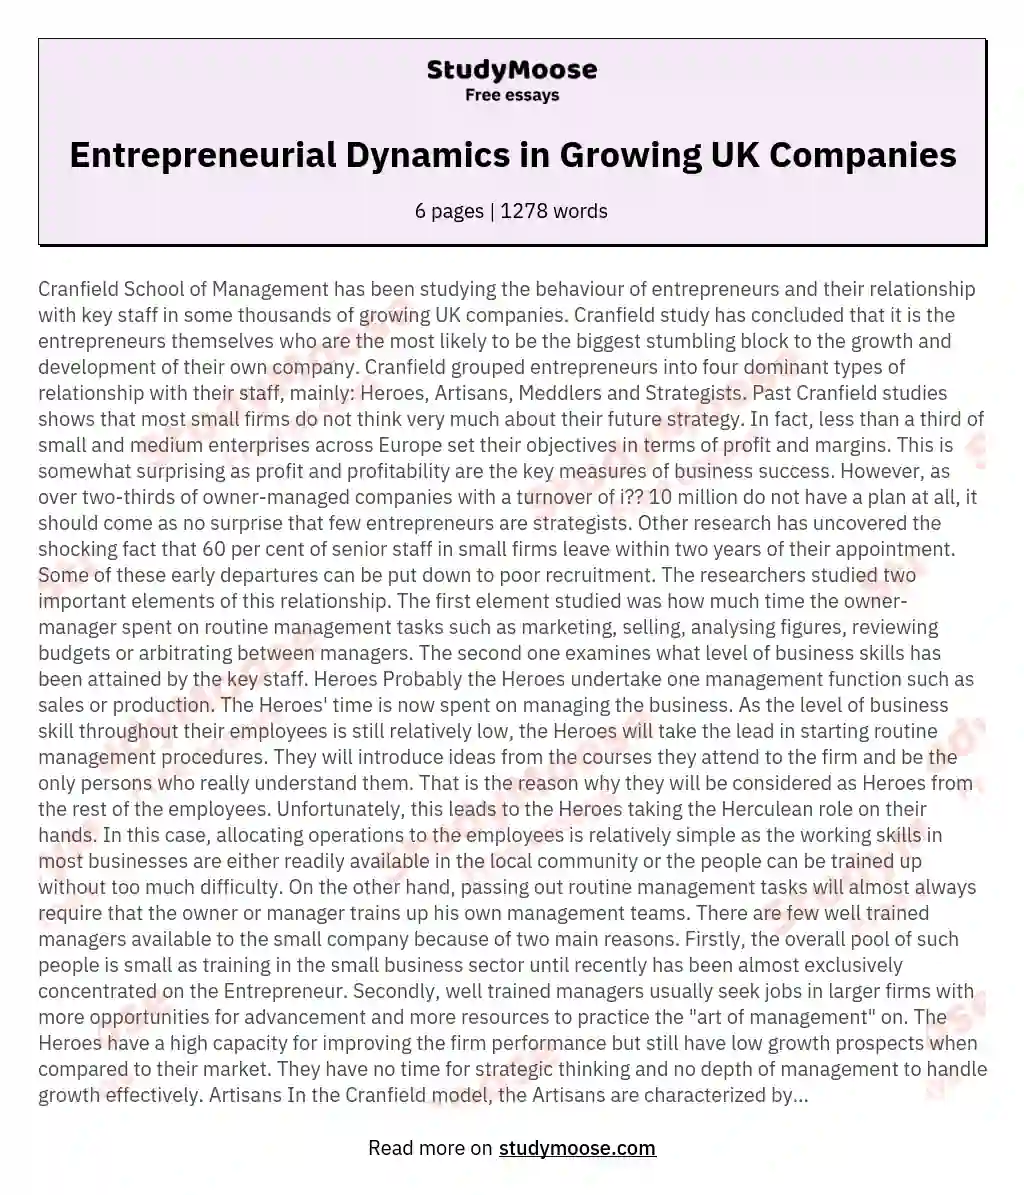 Entrepreneurial Dynamics in Growing UK Companies essay